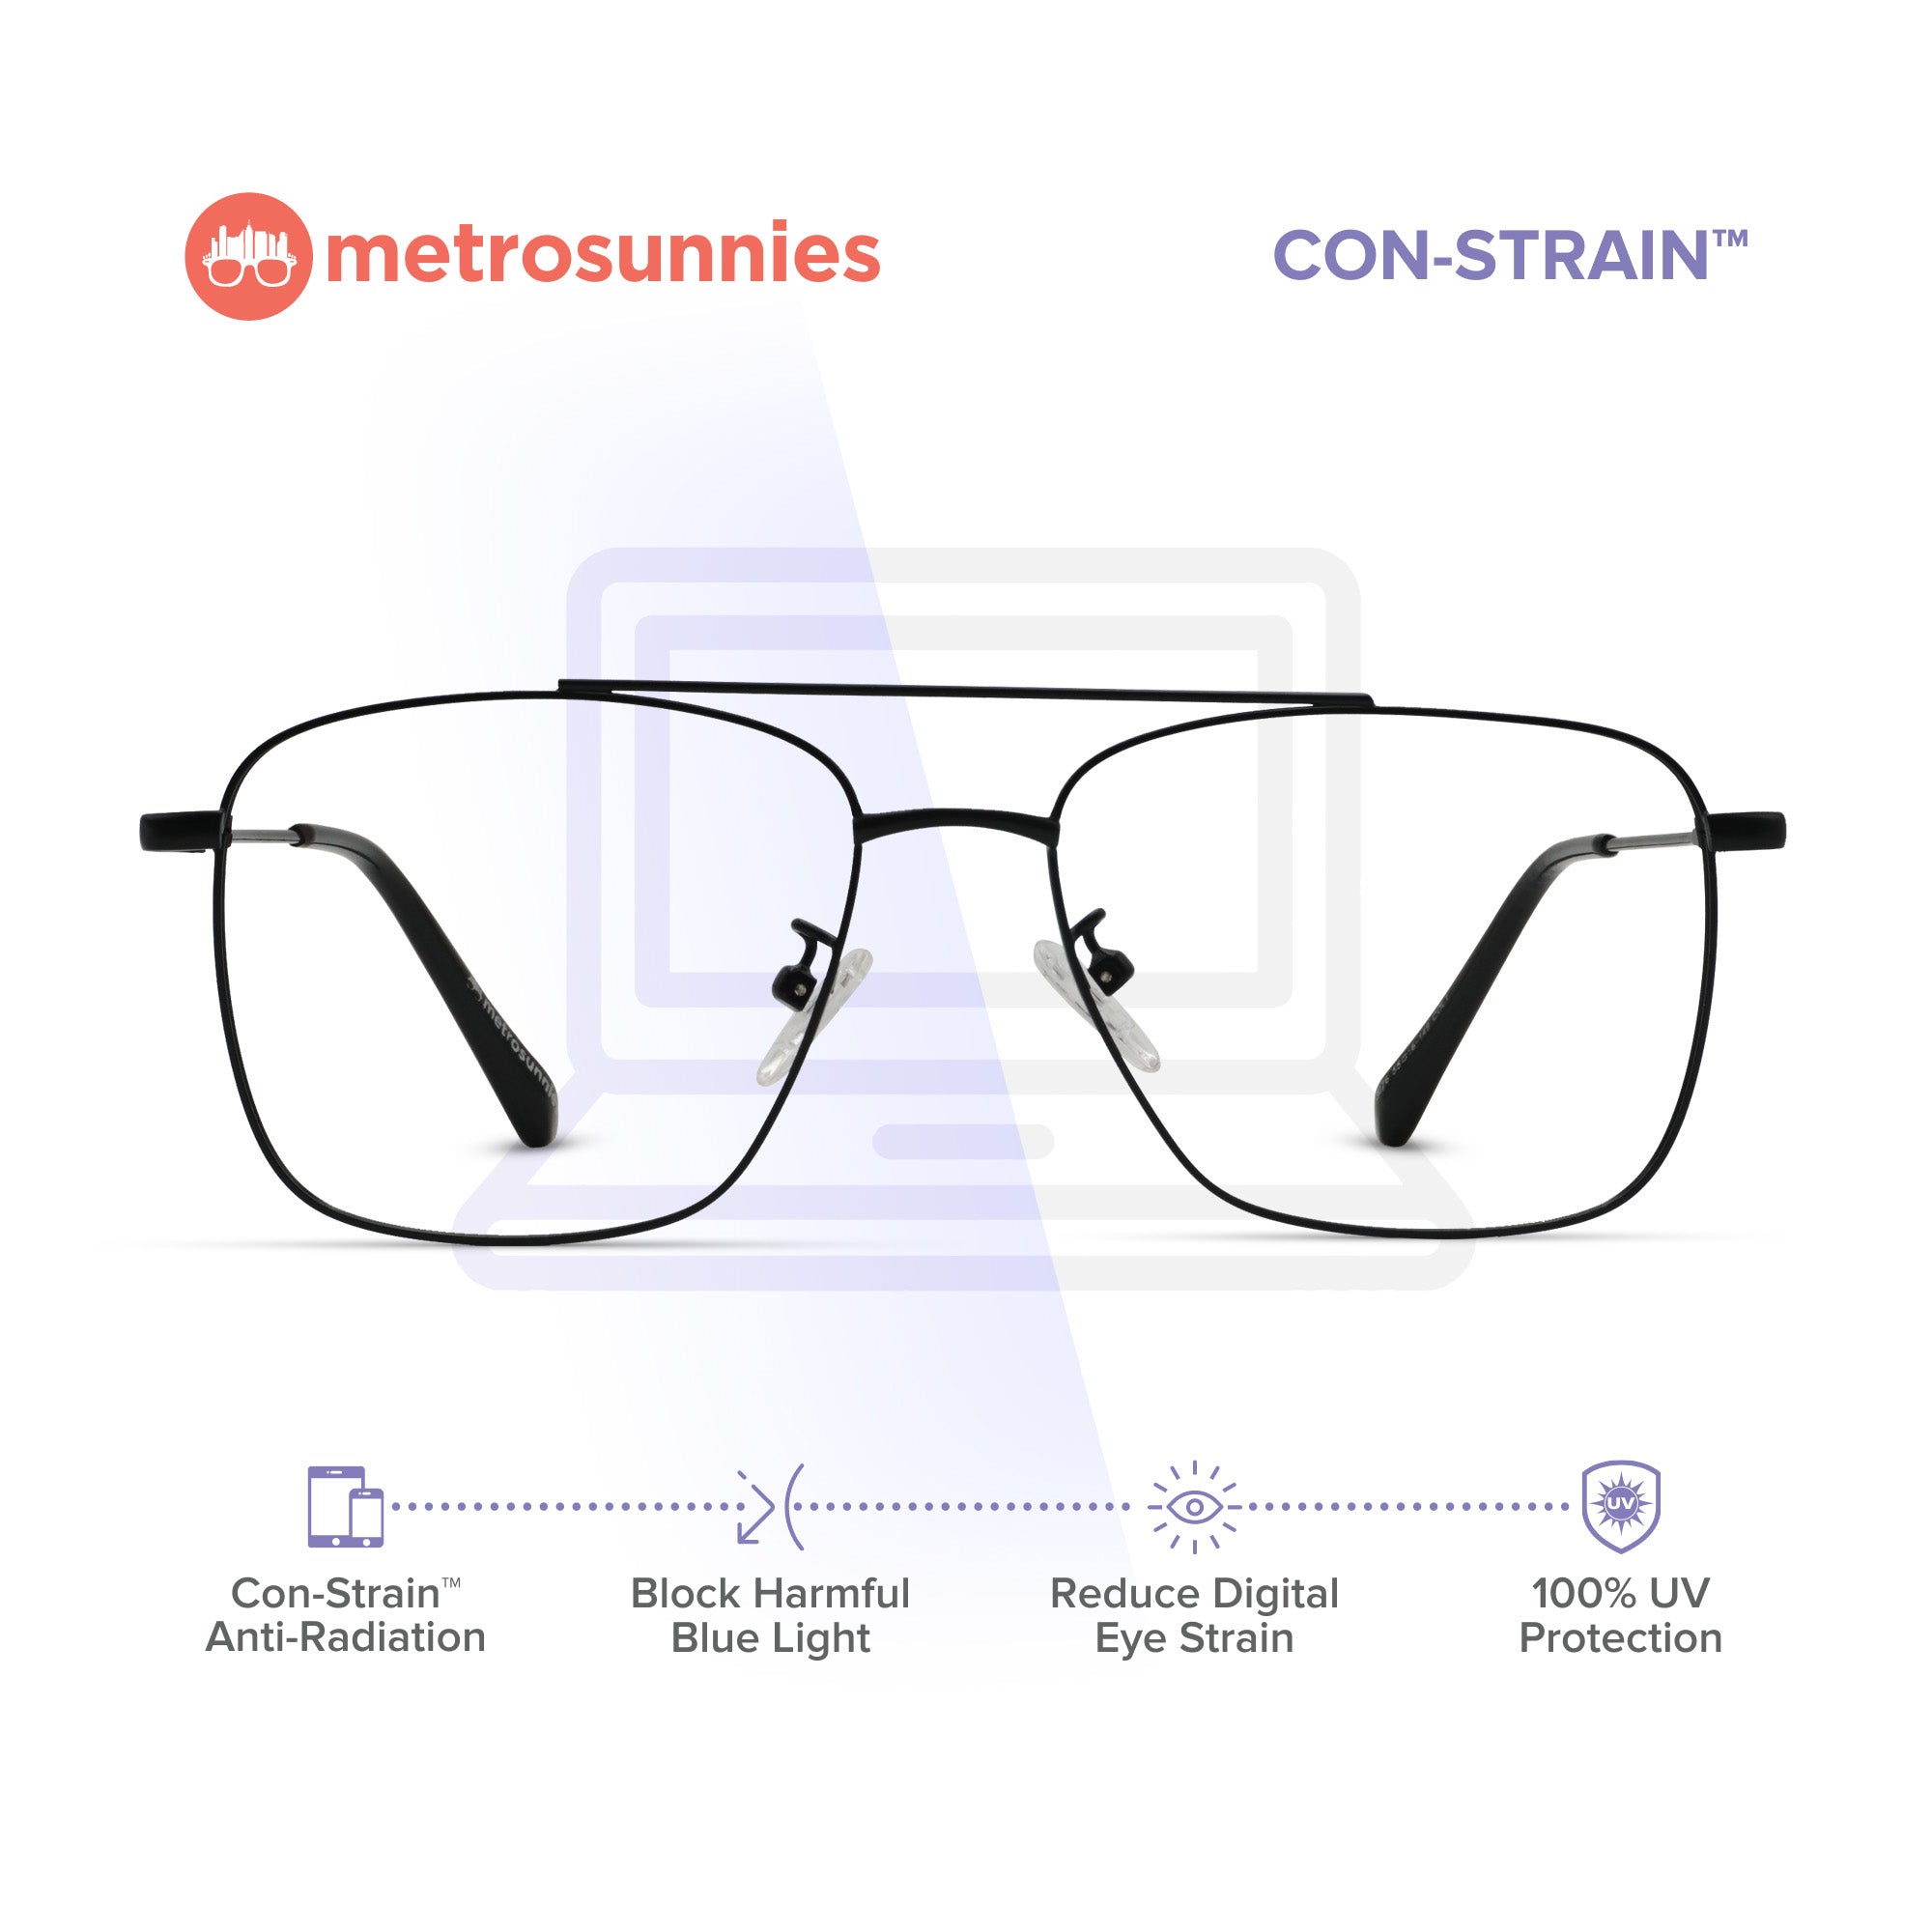 MetroSunnies Terry Specs (Black) / Replaceable Lens / Eyeglasses for Men and Women